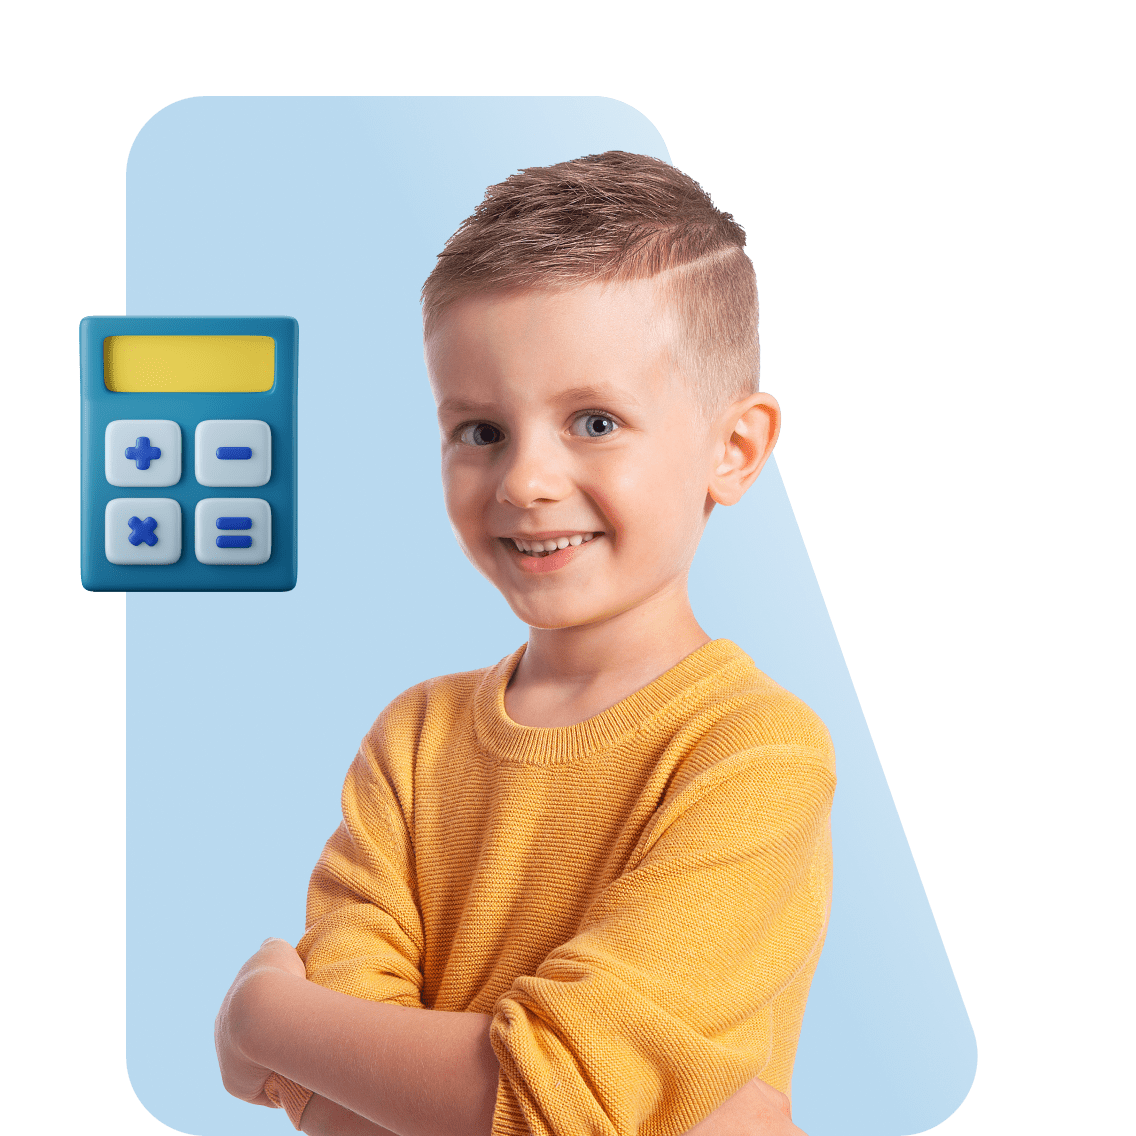 Kindergarten image 10 (name 1 Young Boy Yellow Shirt Math)